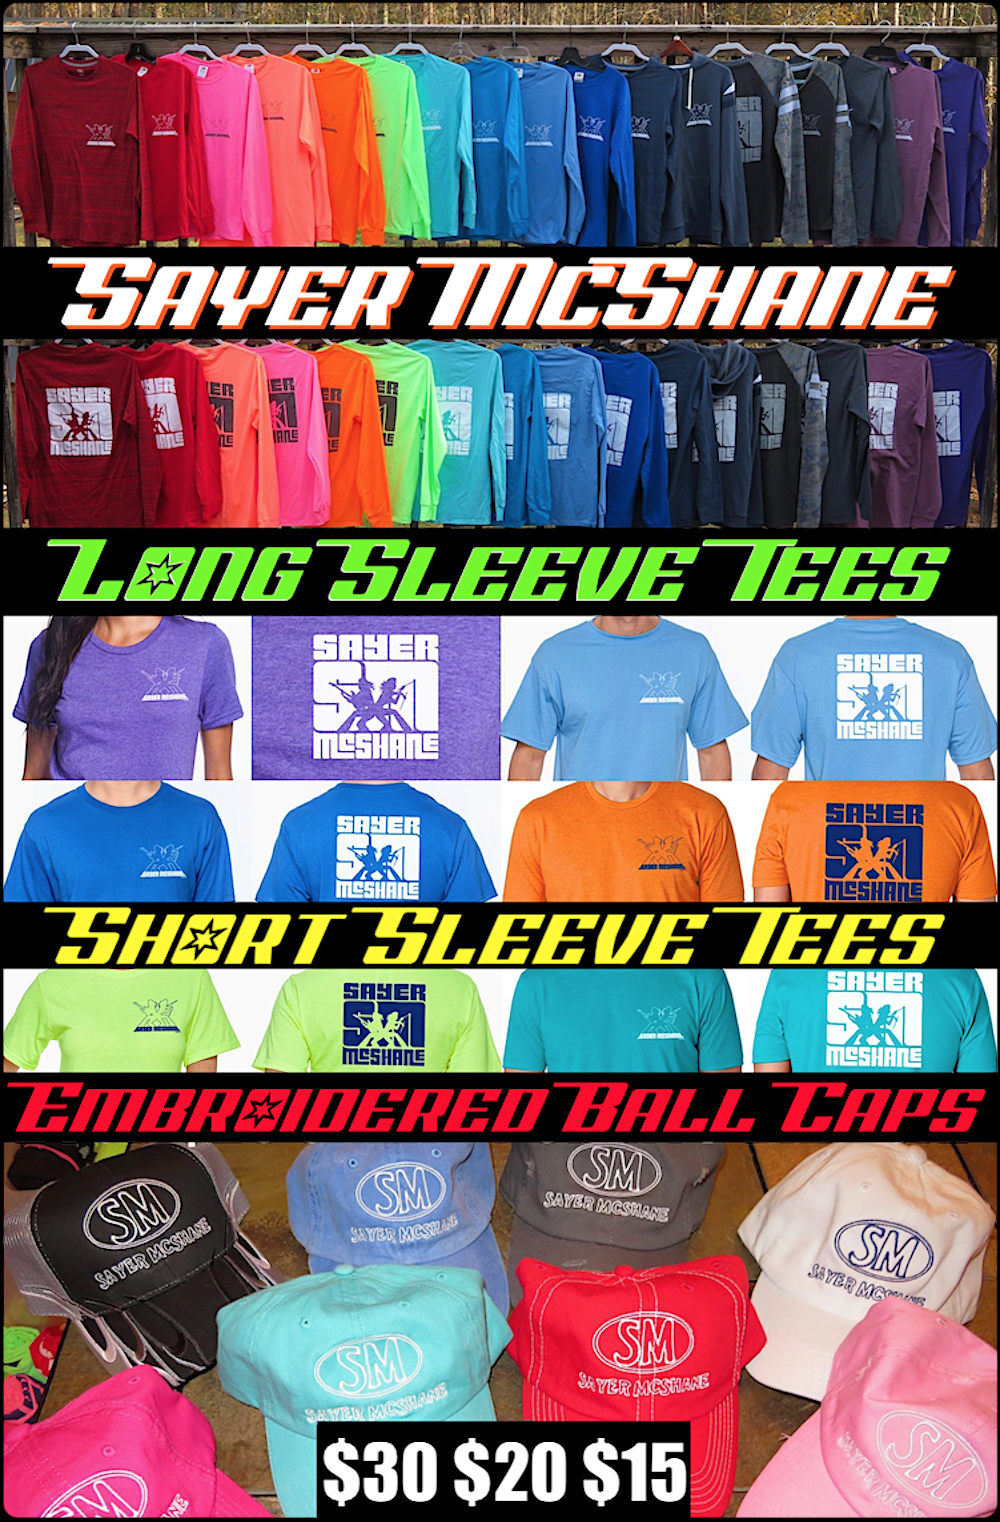 Get Sayer McShane T shirts & ball caps via our Paypal at sayermcshaneshow@gmail.com